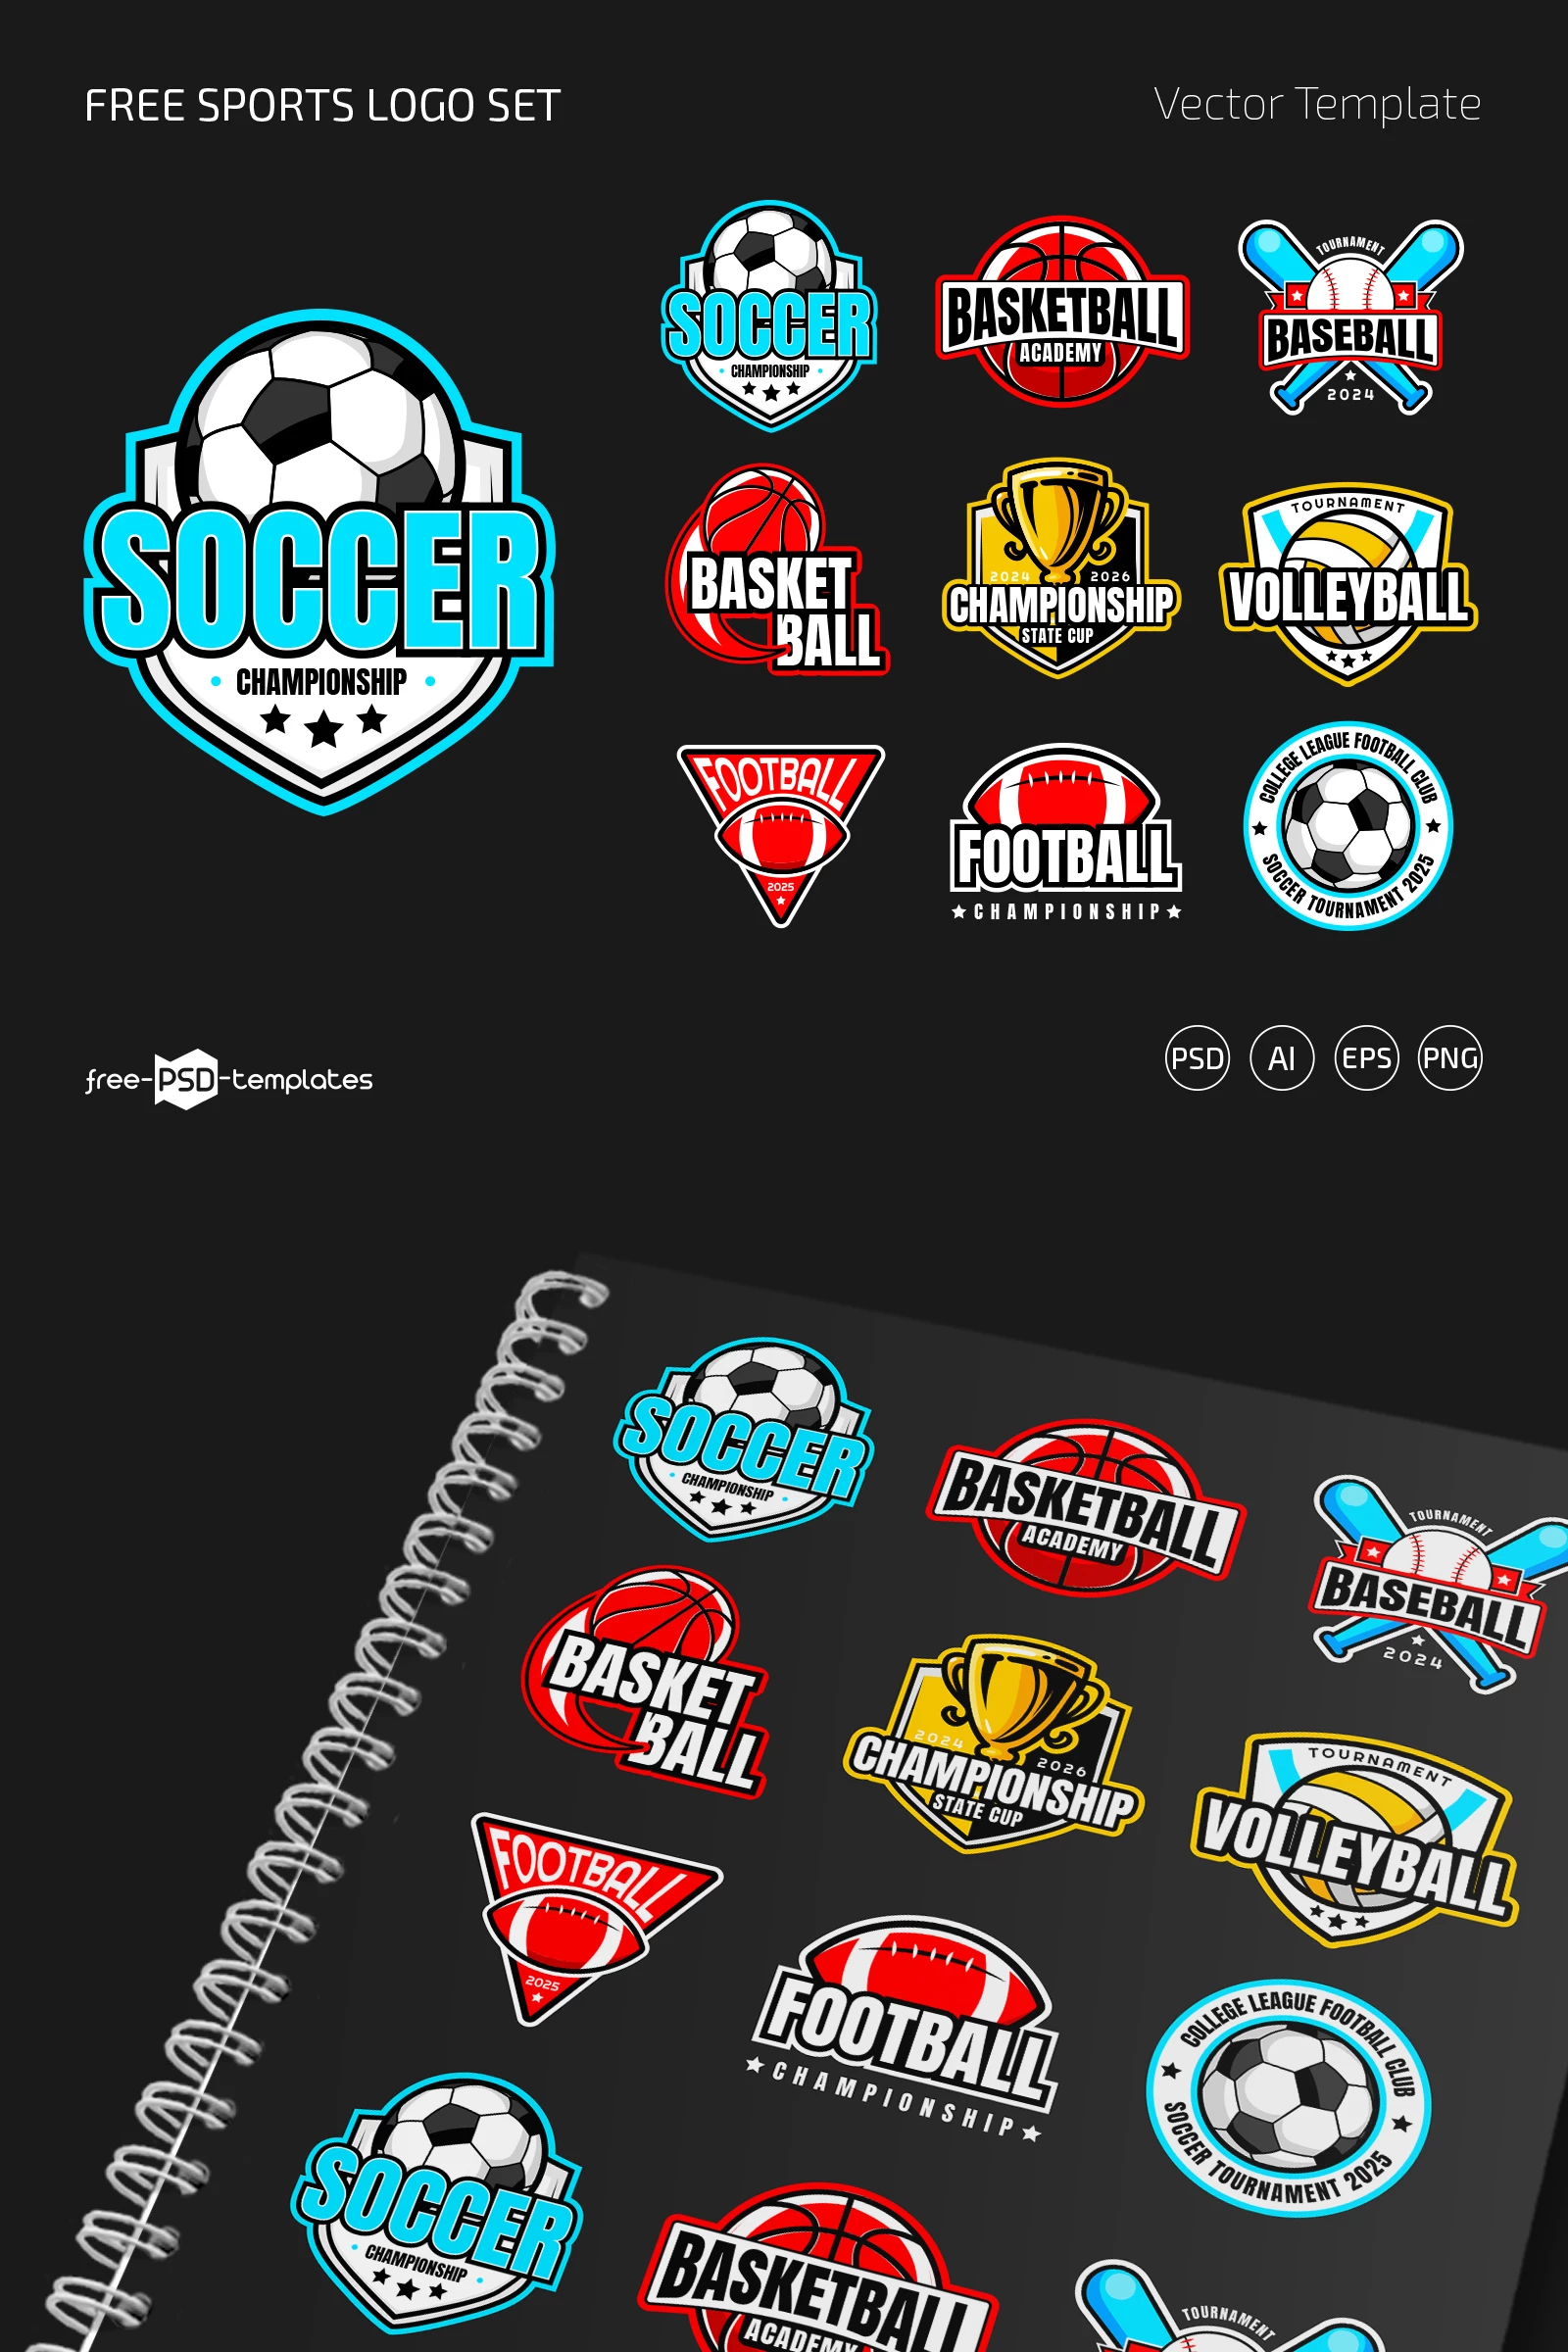 Free Sports Logo Template